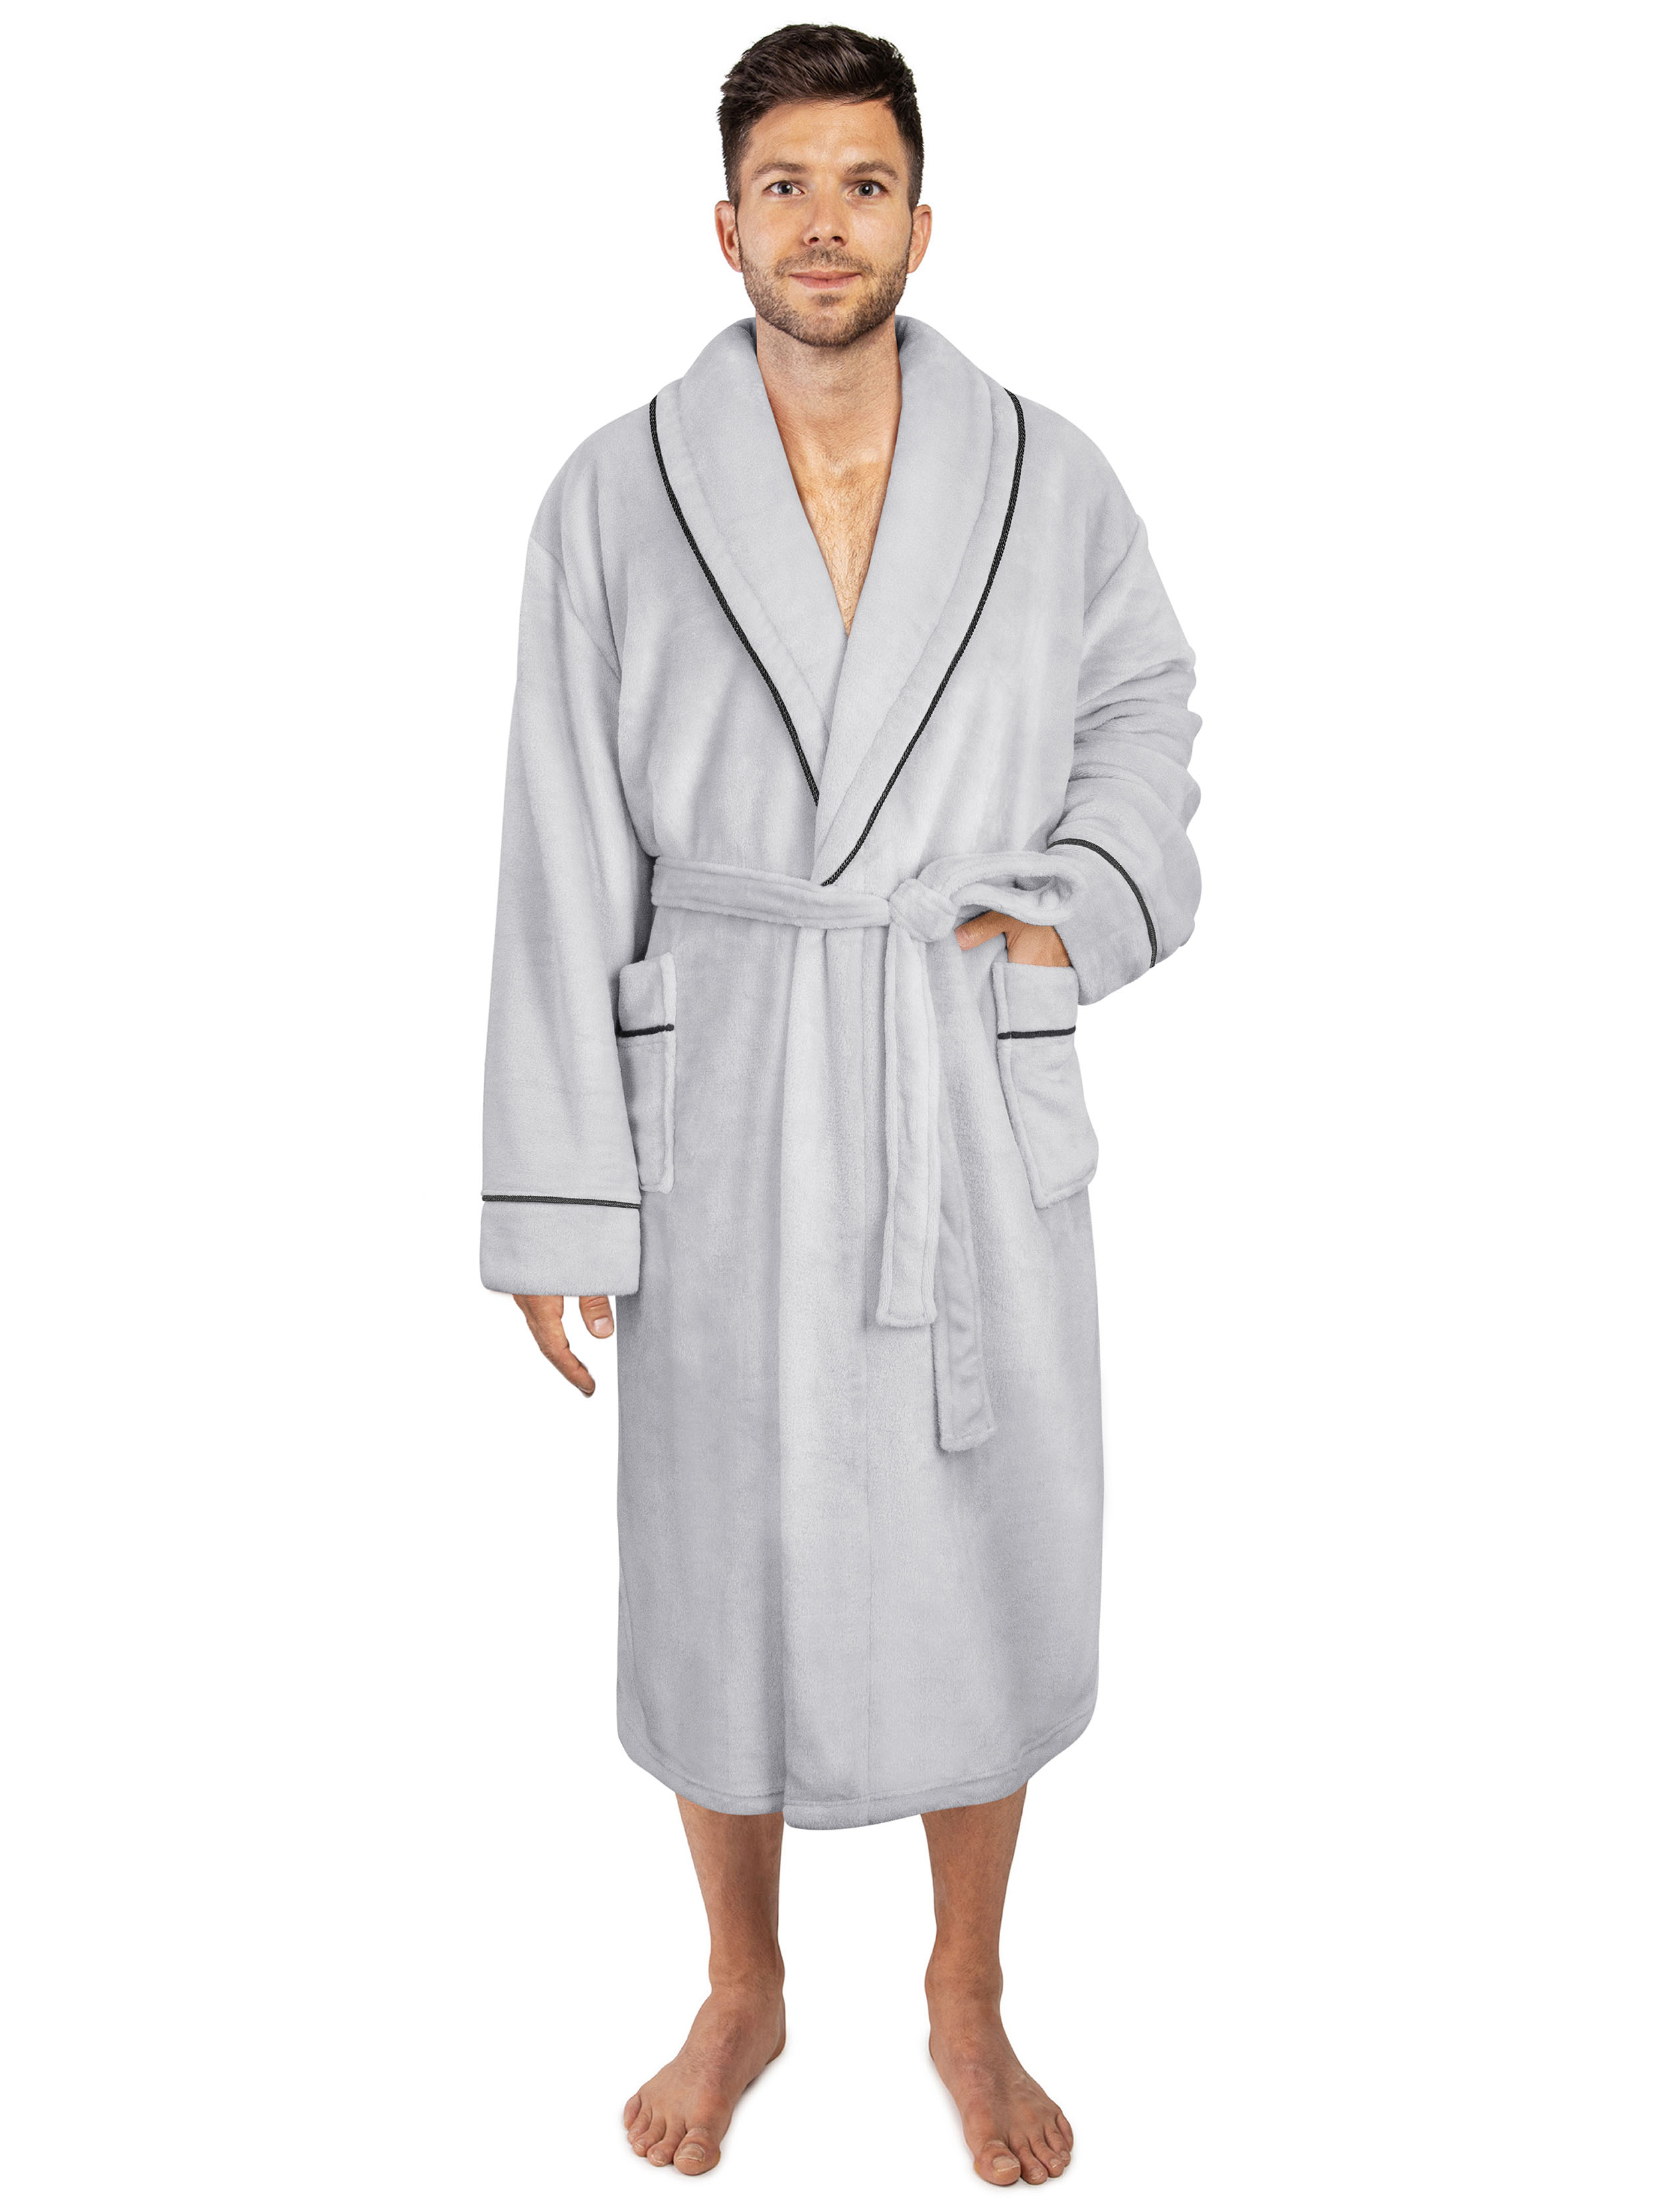 Richie House 100% LUXURY Men Soft Fleece Long Collar Bath Robe Spa Sle